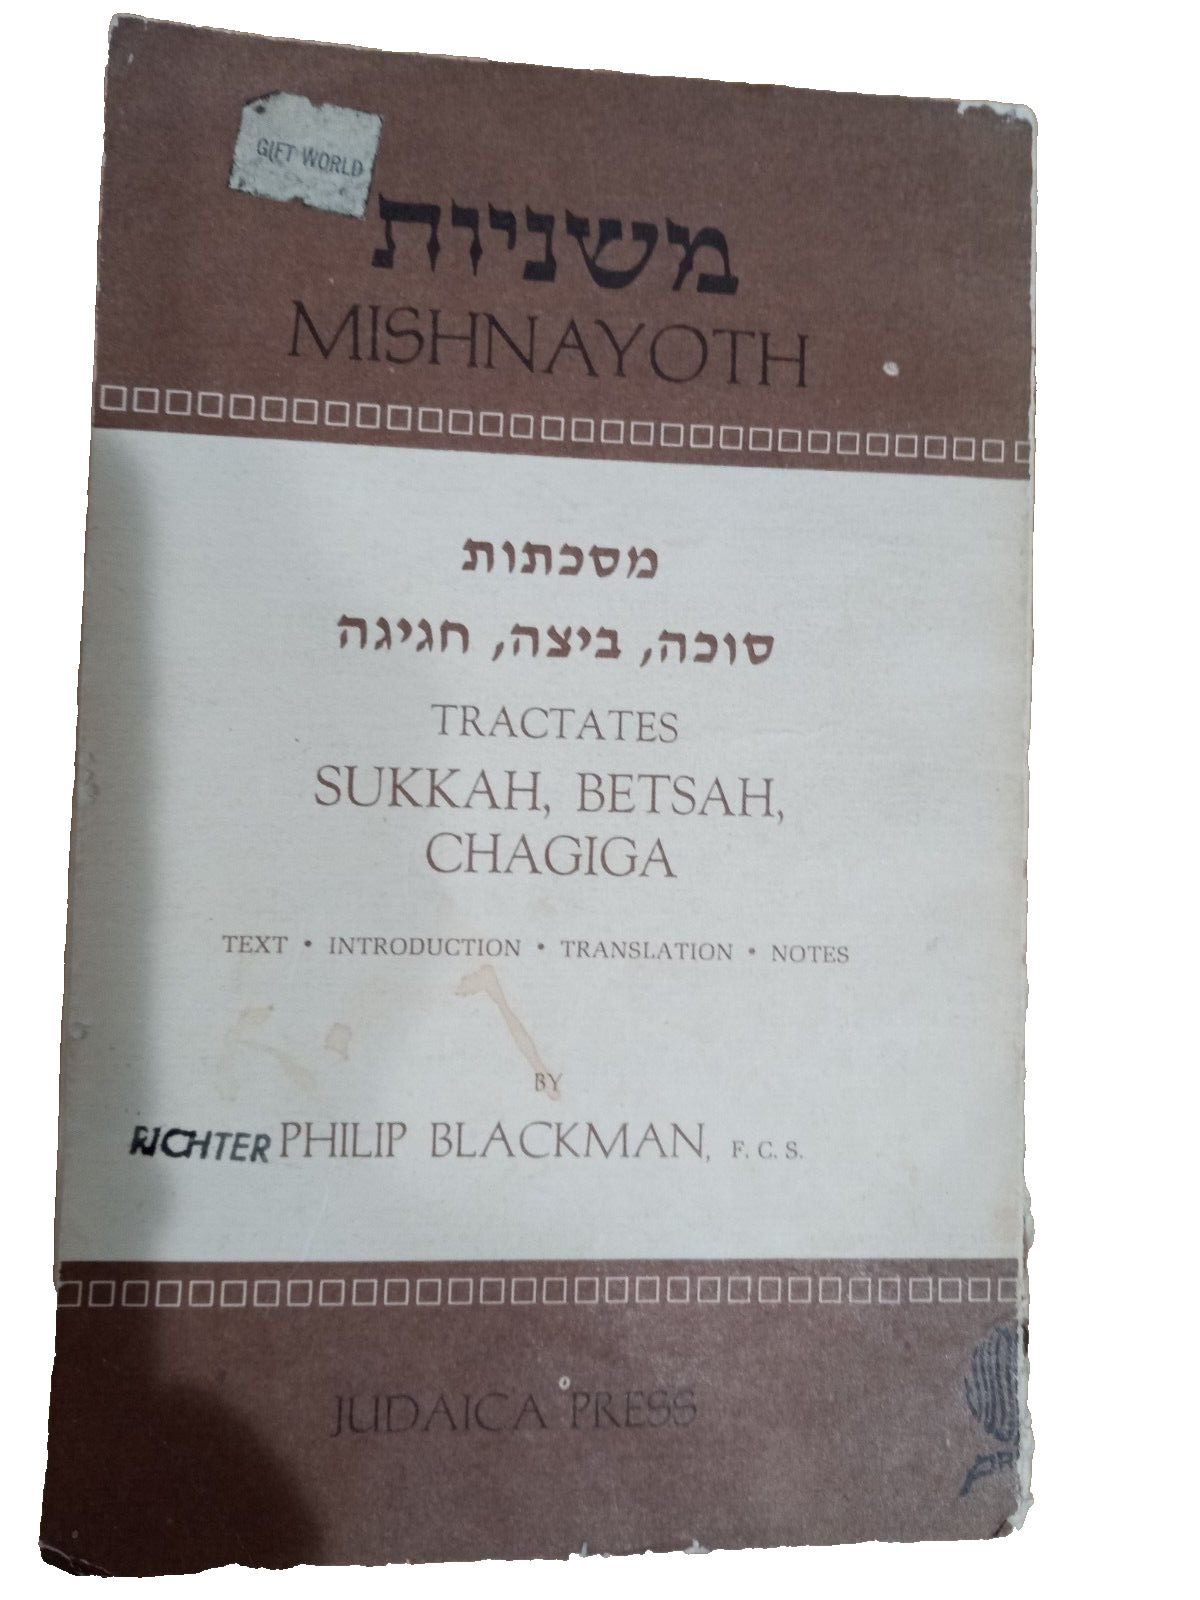 Mishnayoth- TRactates Sukkah, Bersah, Chagiga, Philip Blackman, Judaica Press\'97